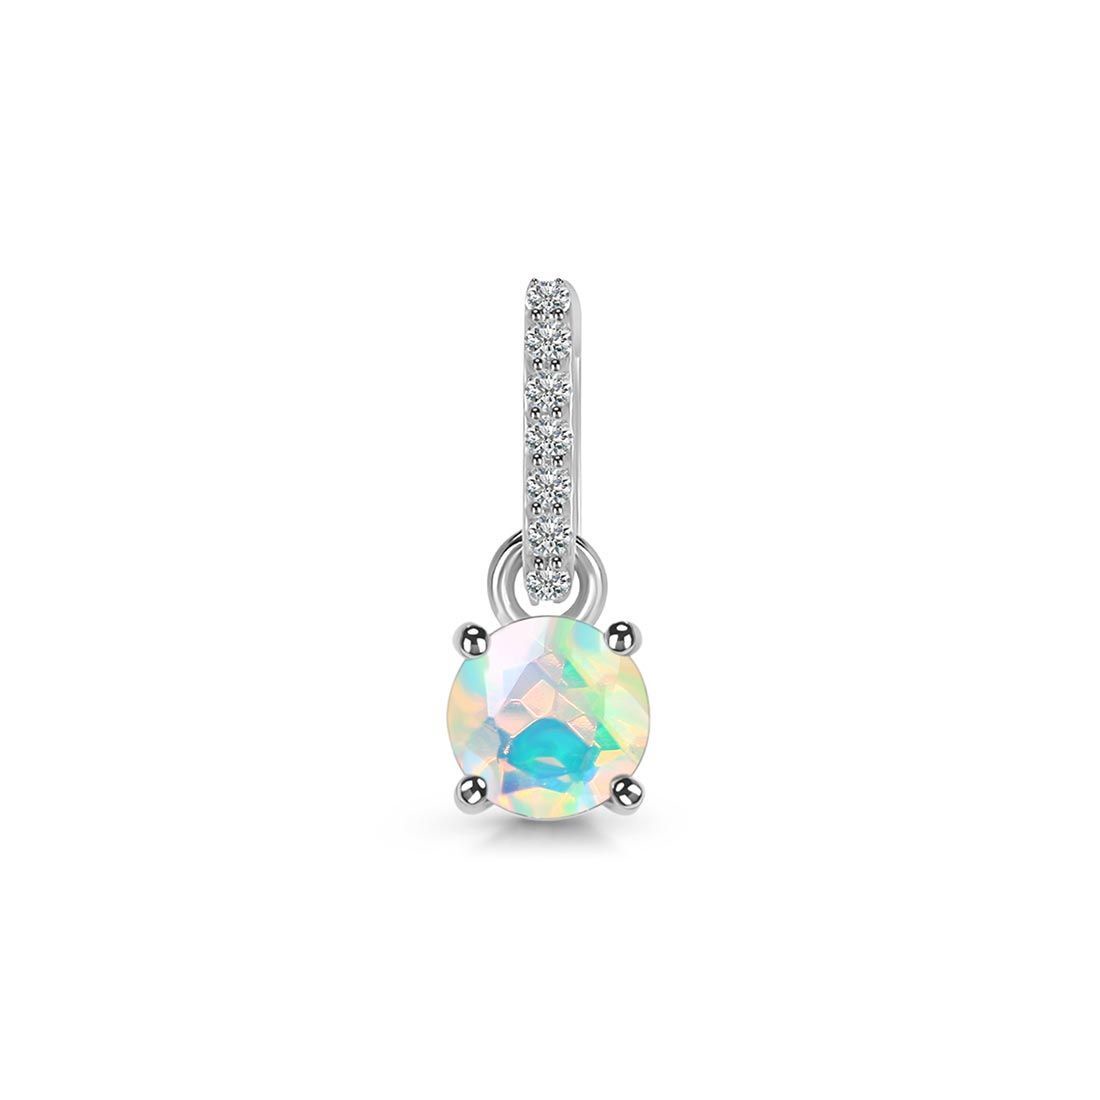 Beautiful Opal Gemstone Jewelry At Sagacia Jewelry